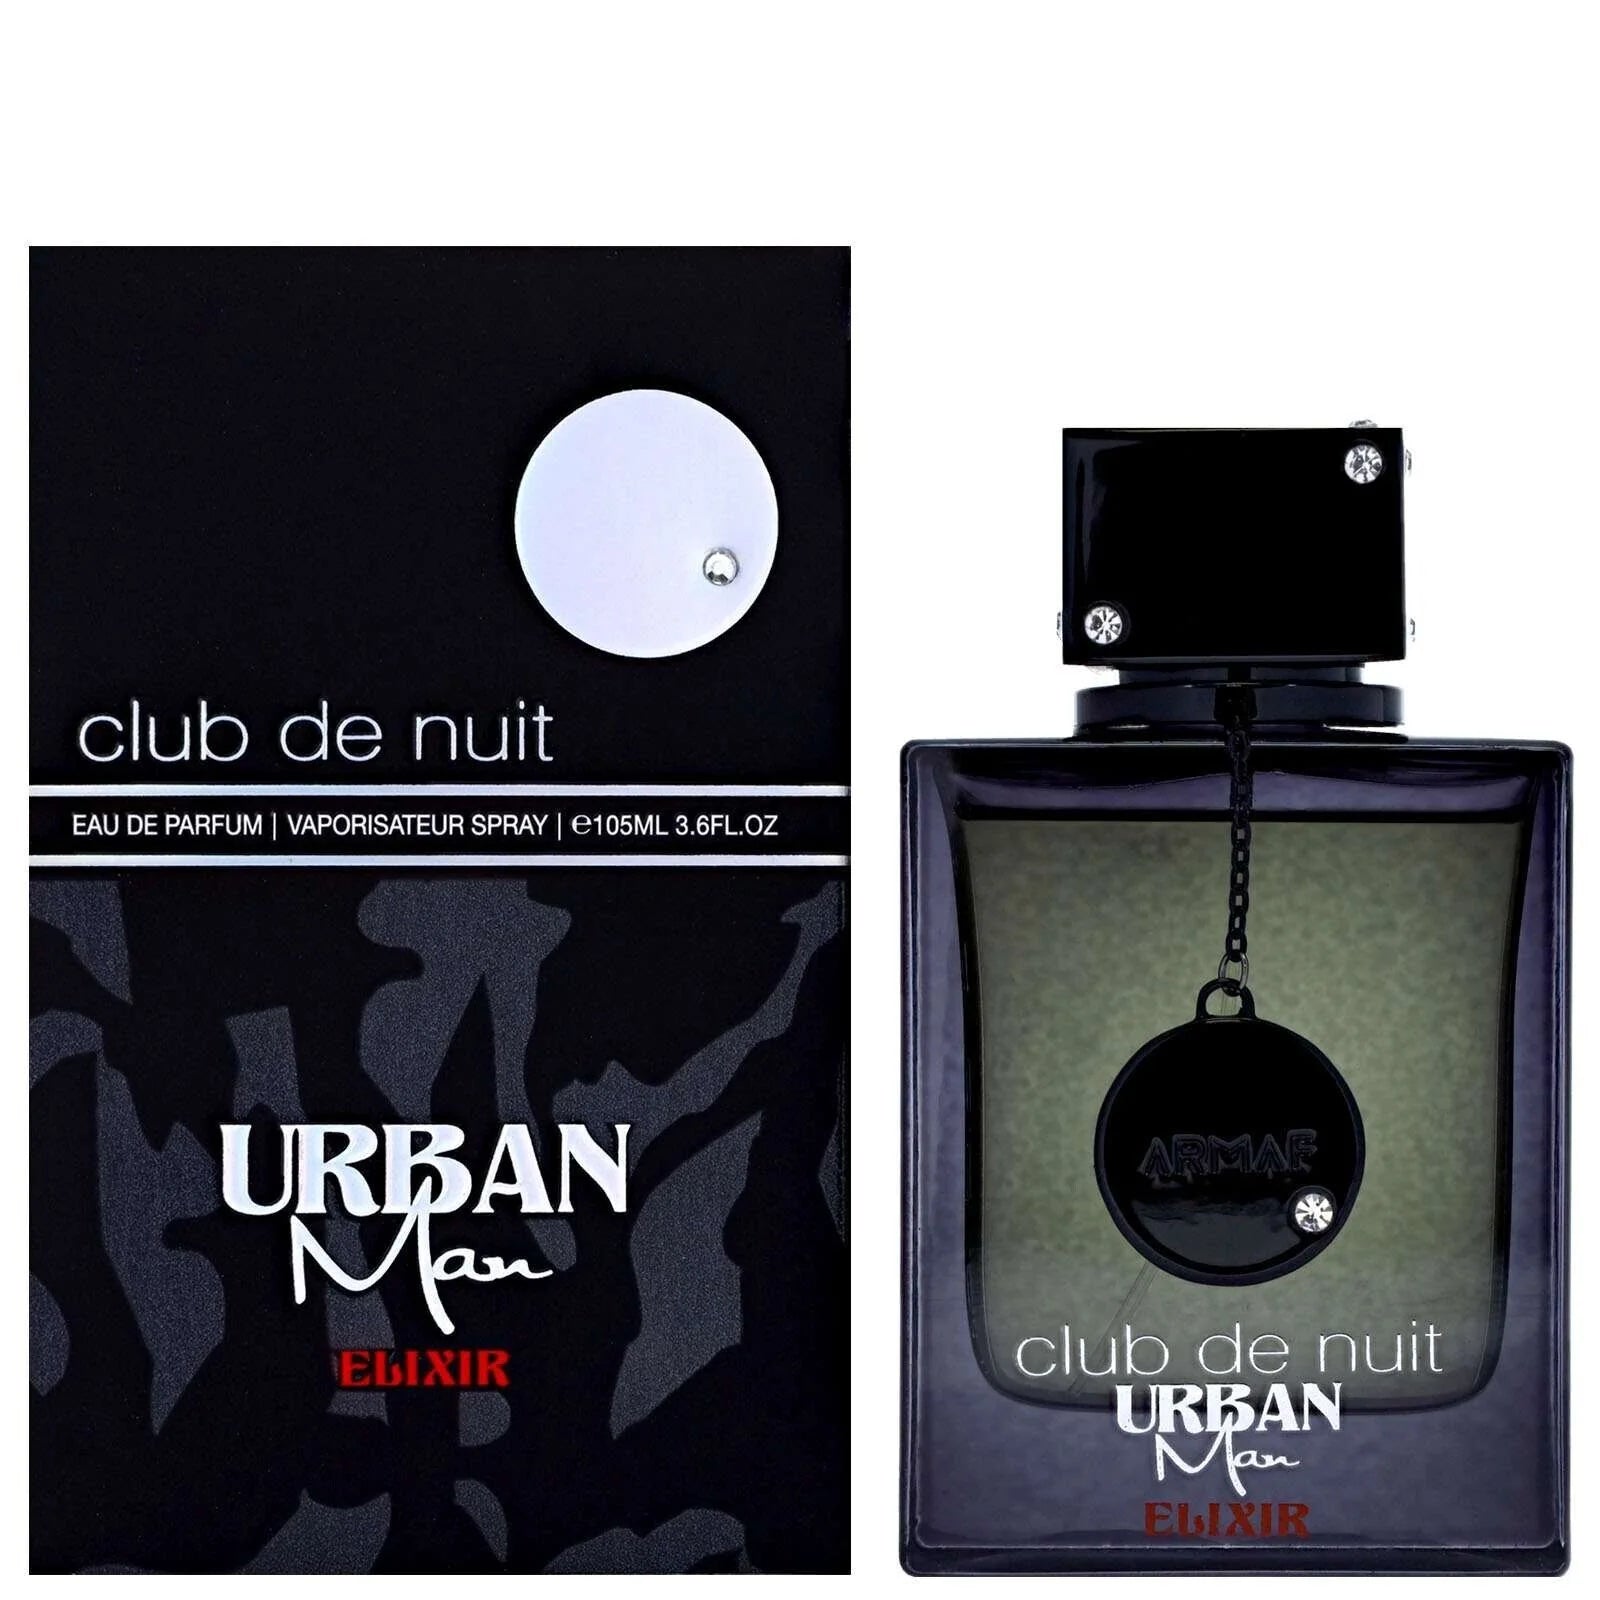 Perfume Armaf Club De Nuit Urban Man Elixir Edp 105ml Hombre - Aroma Como Sauvage